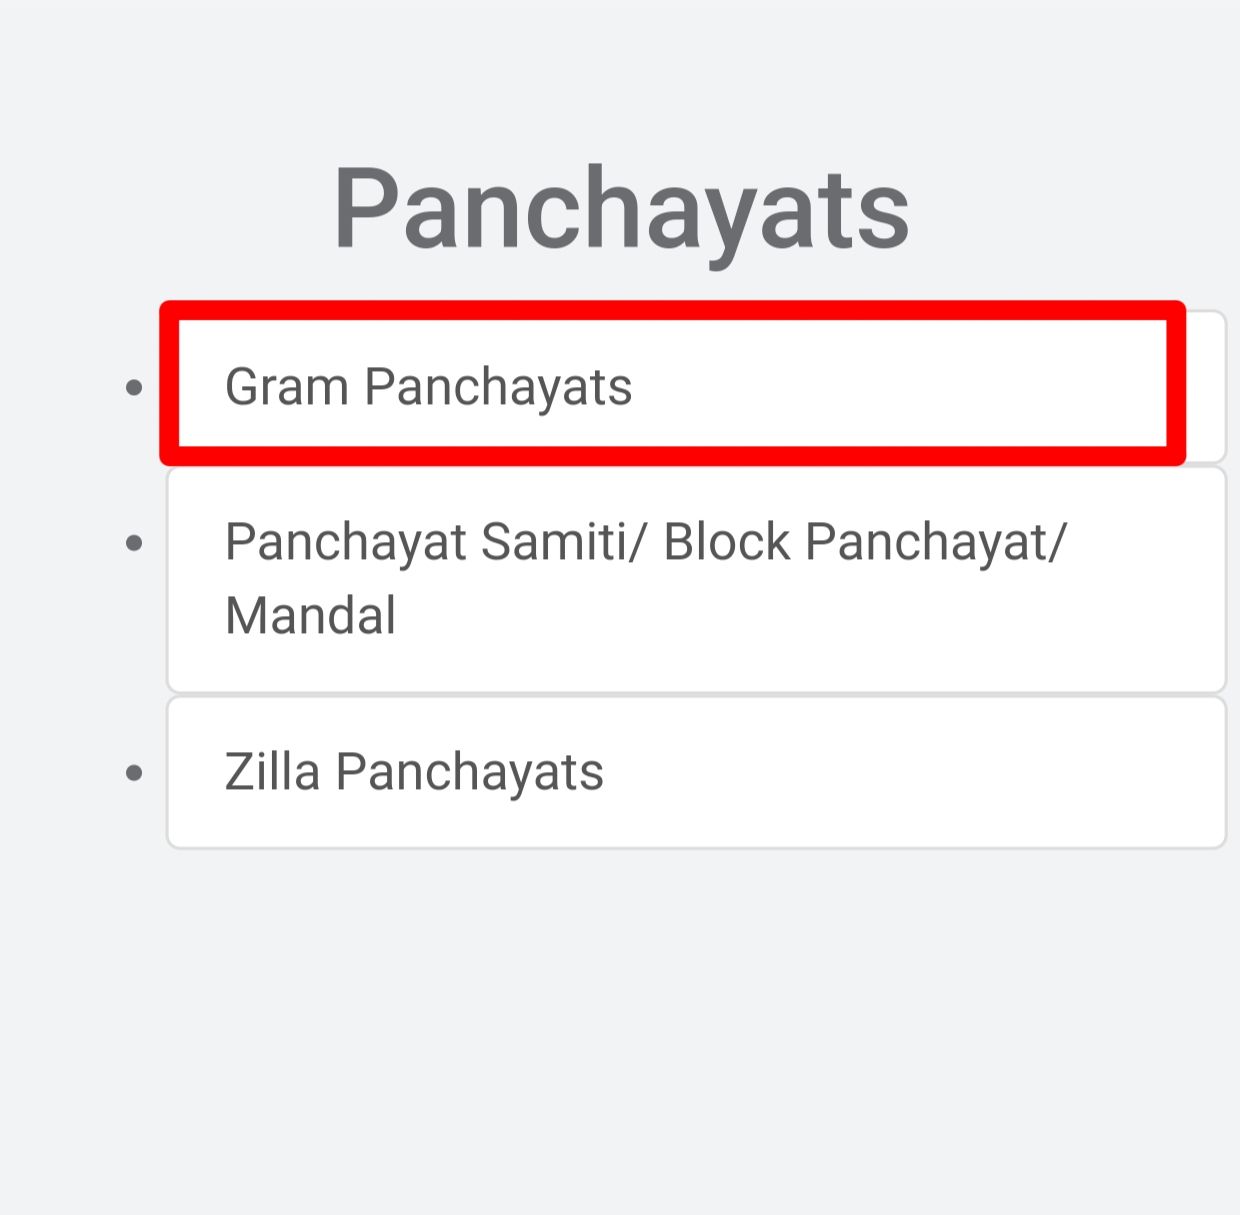 Gram Panchayats